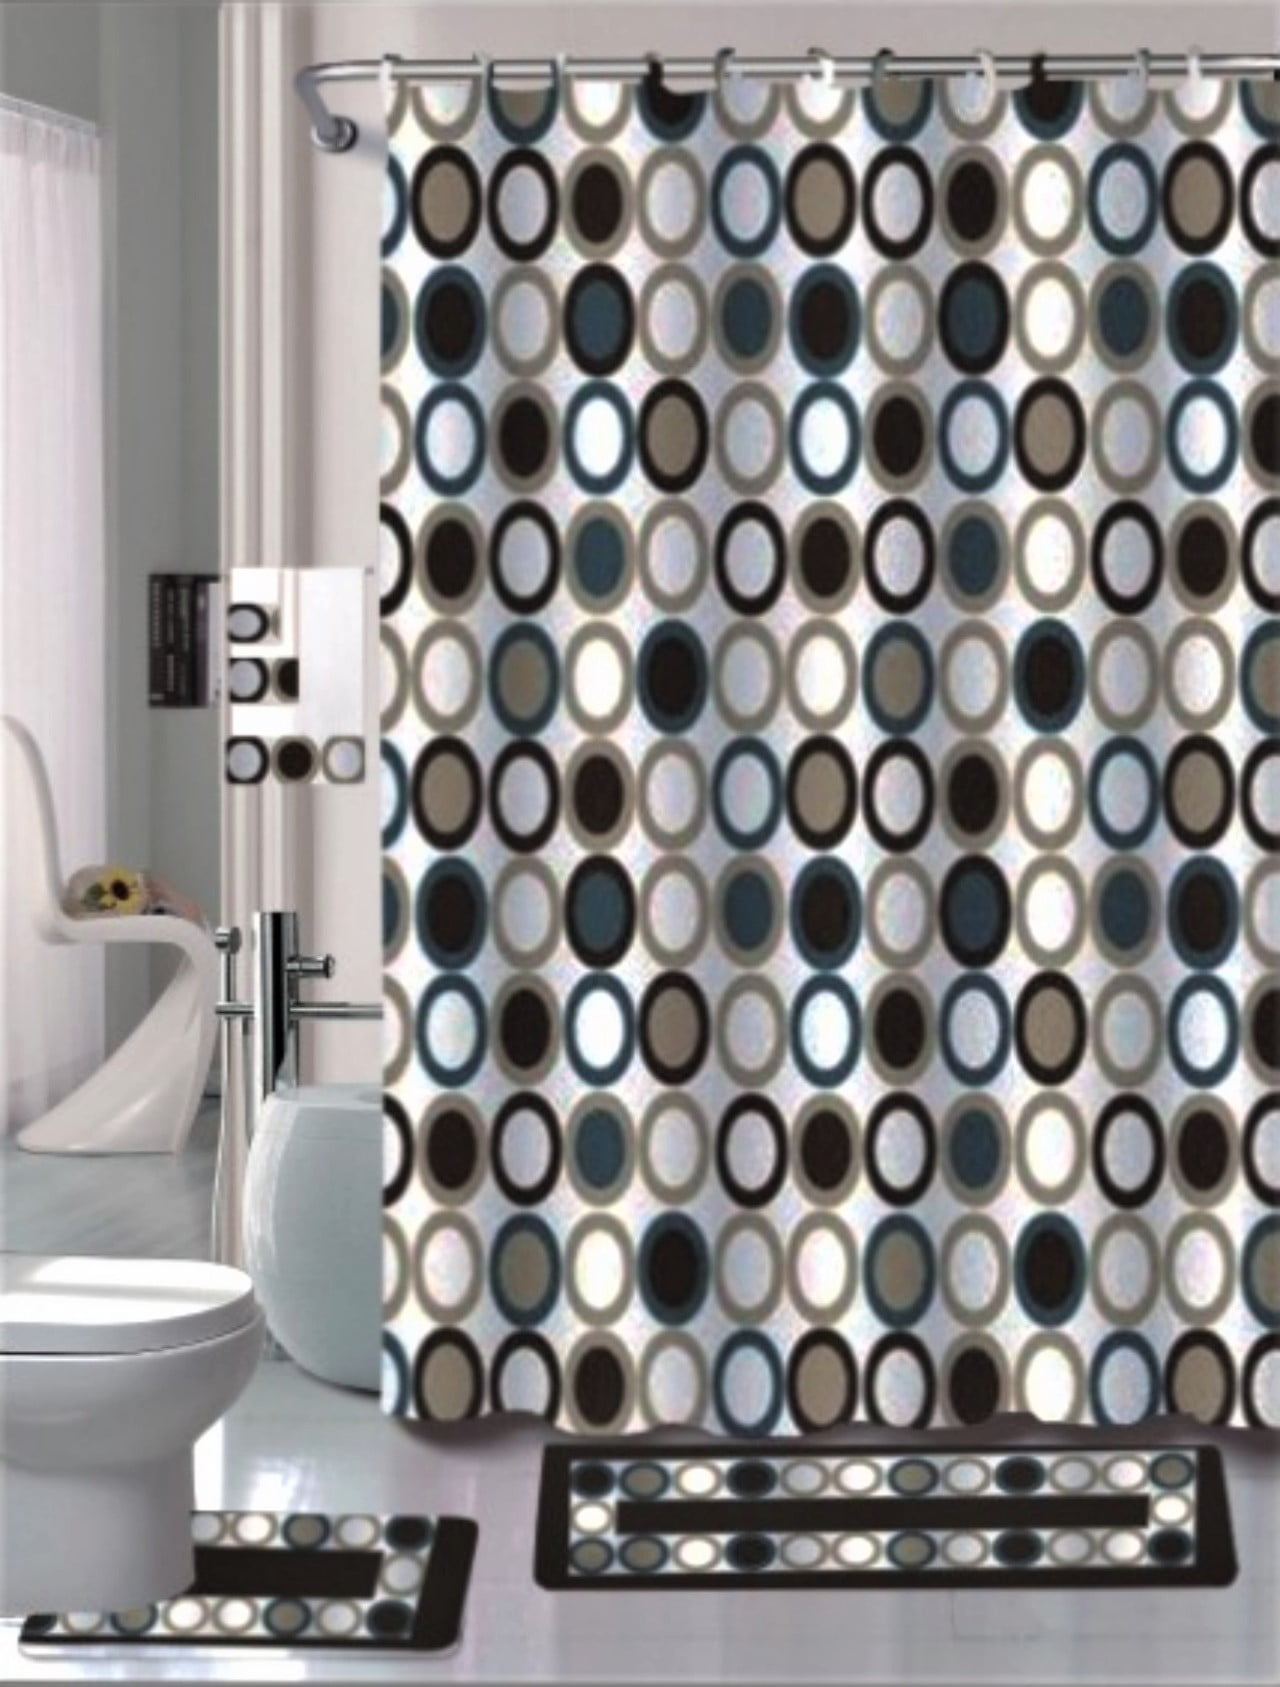 Starry Night Shower Curtain Bath Mat Toilet Cover Rug Blue Bathroom Decor Set 